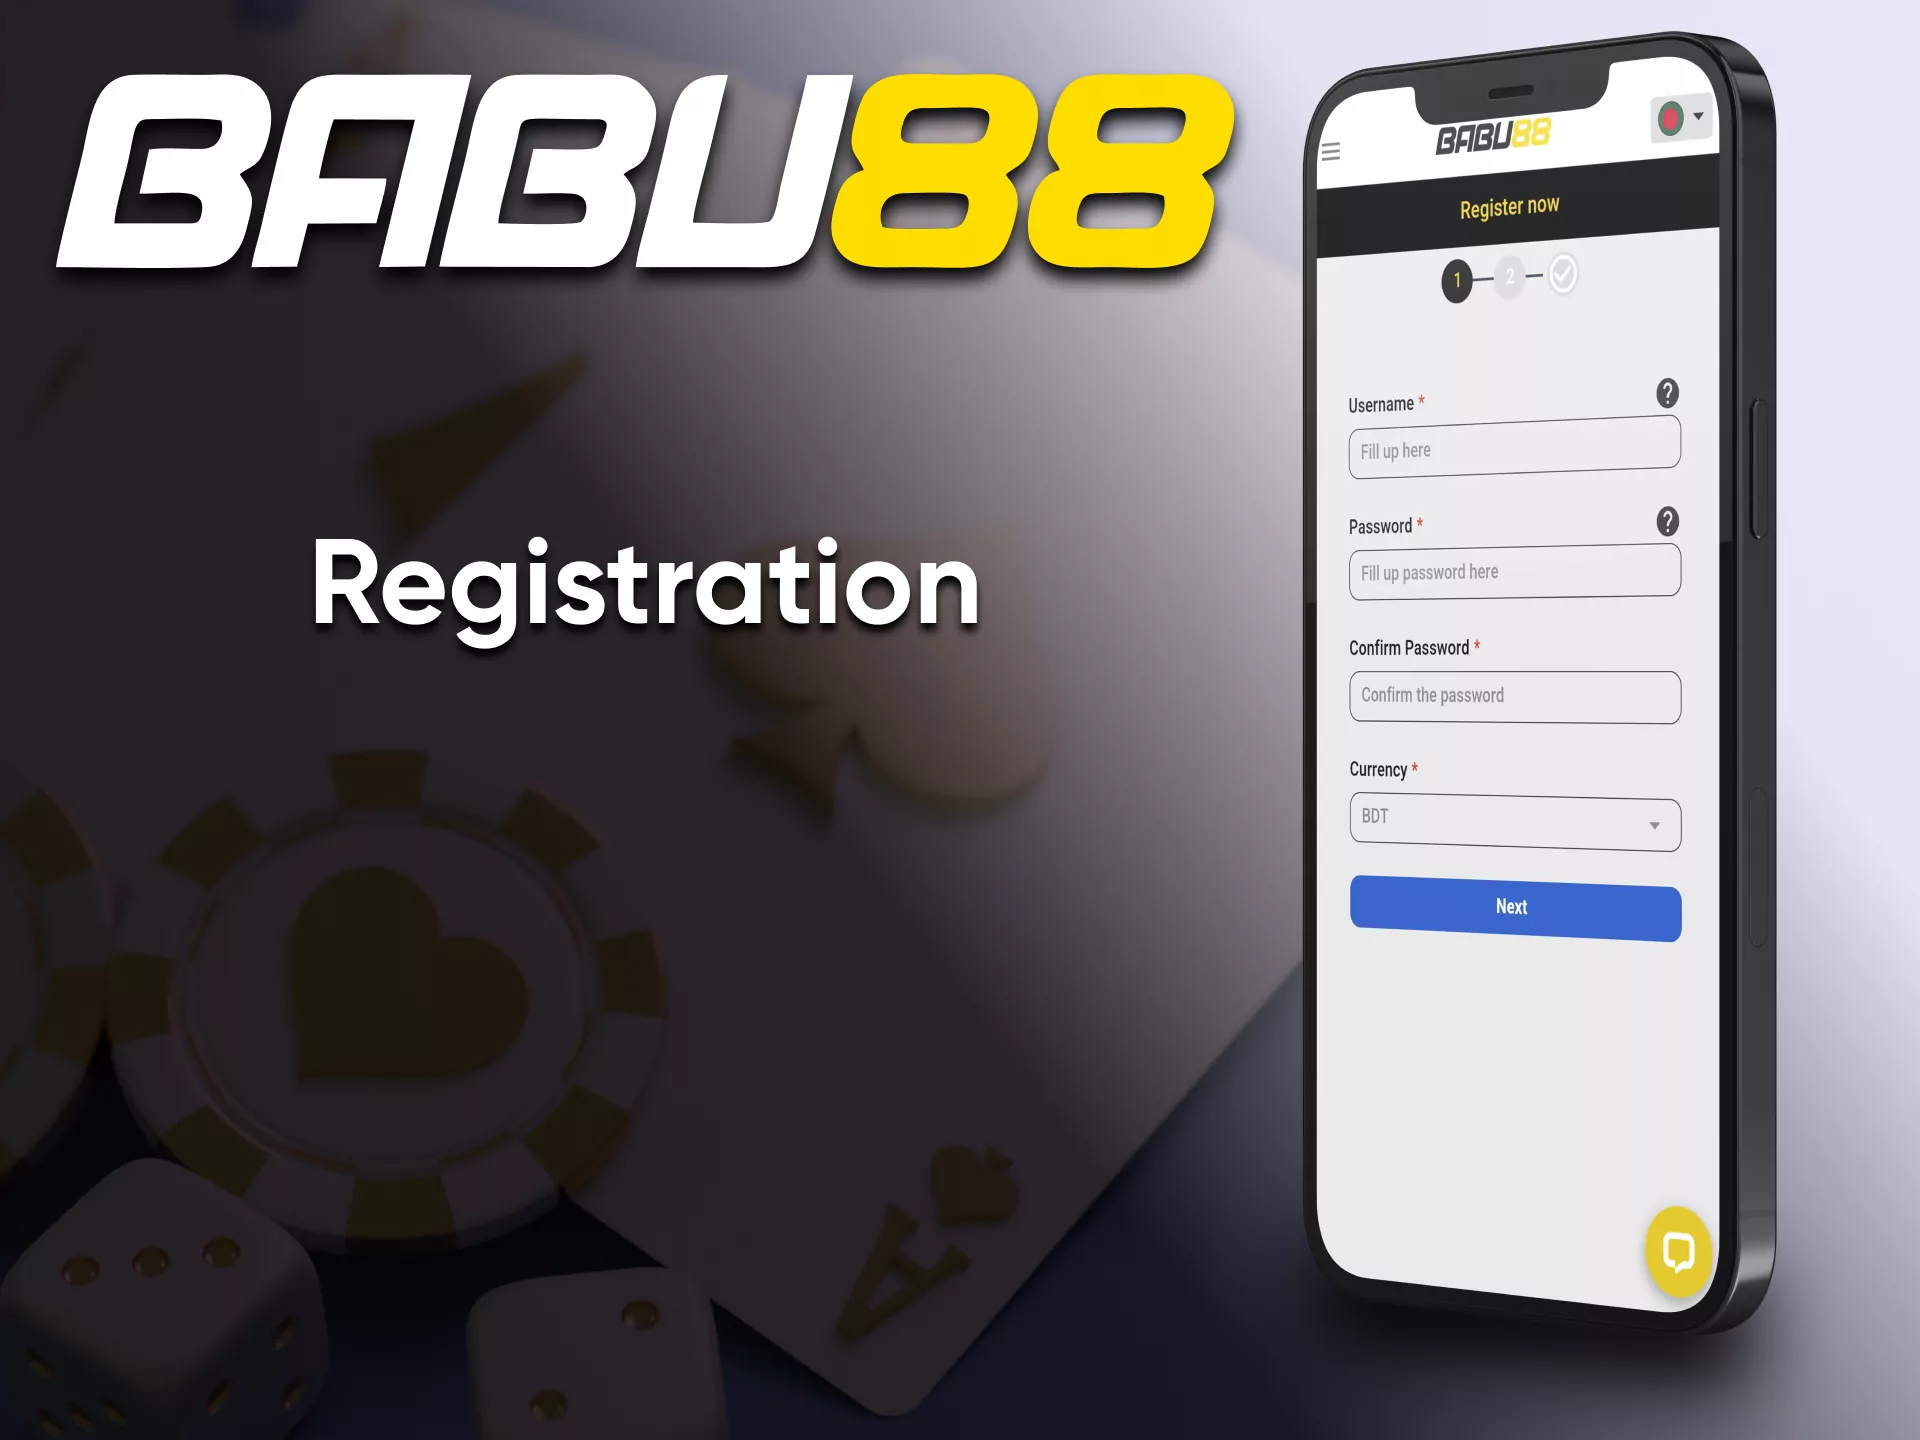 Go through the registration process to create a Babu88 account.